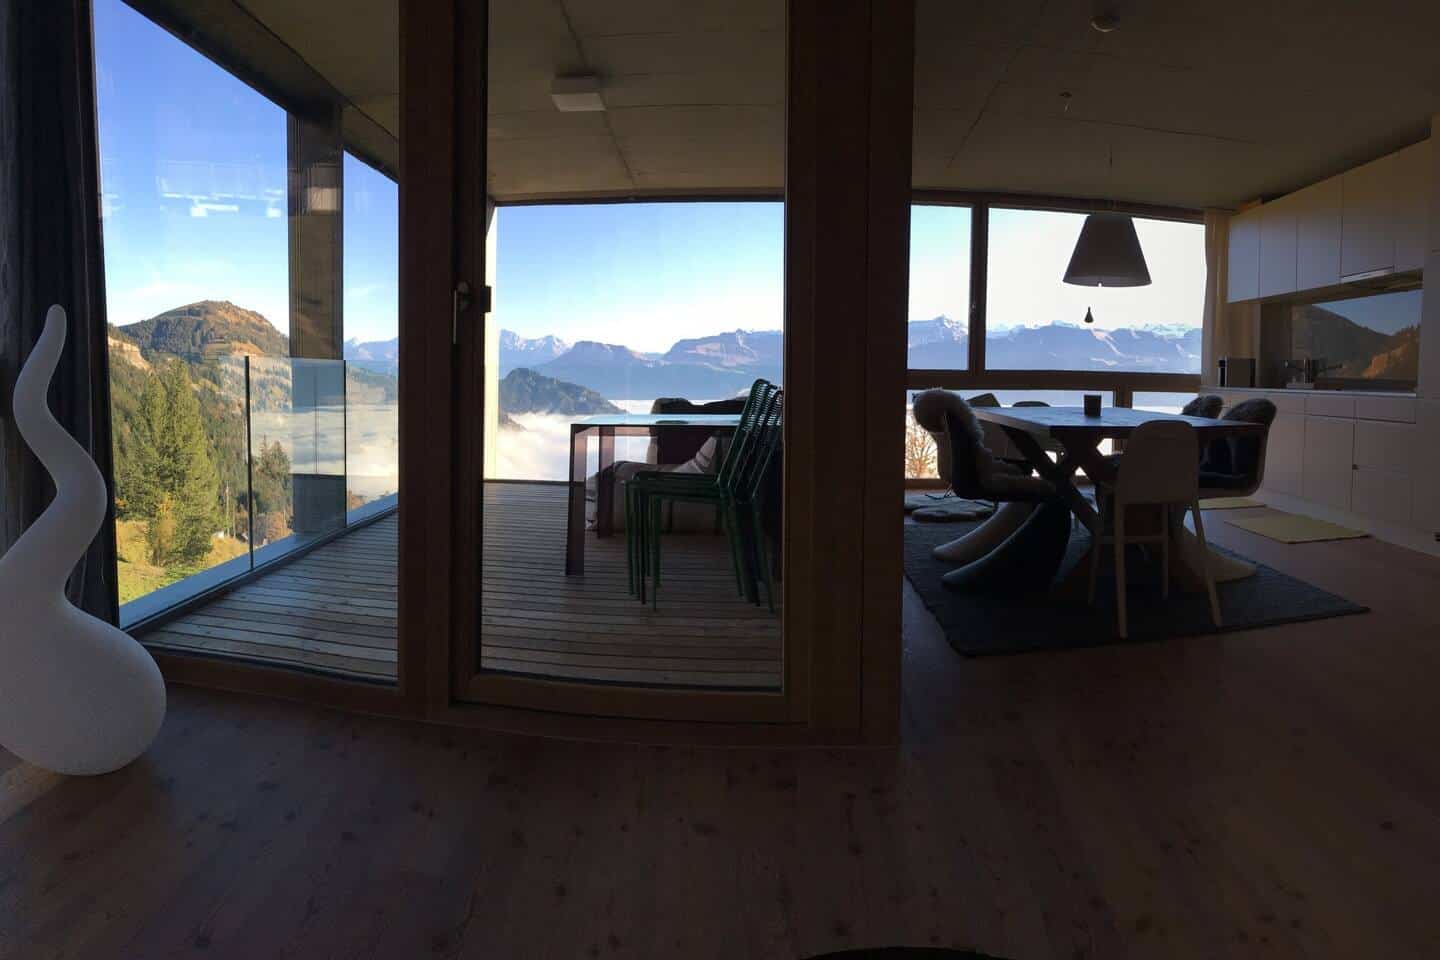 Image of Airbnb rental in Lucerne, Switzerland